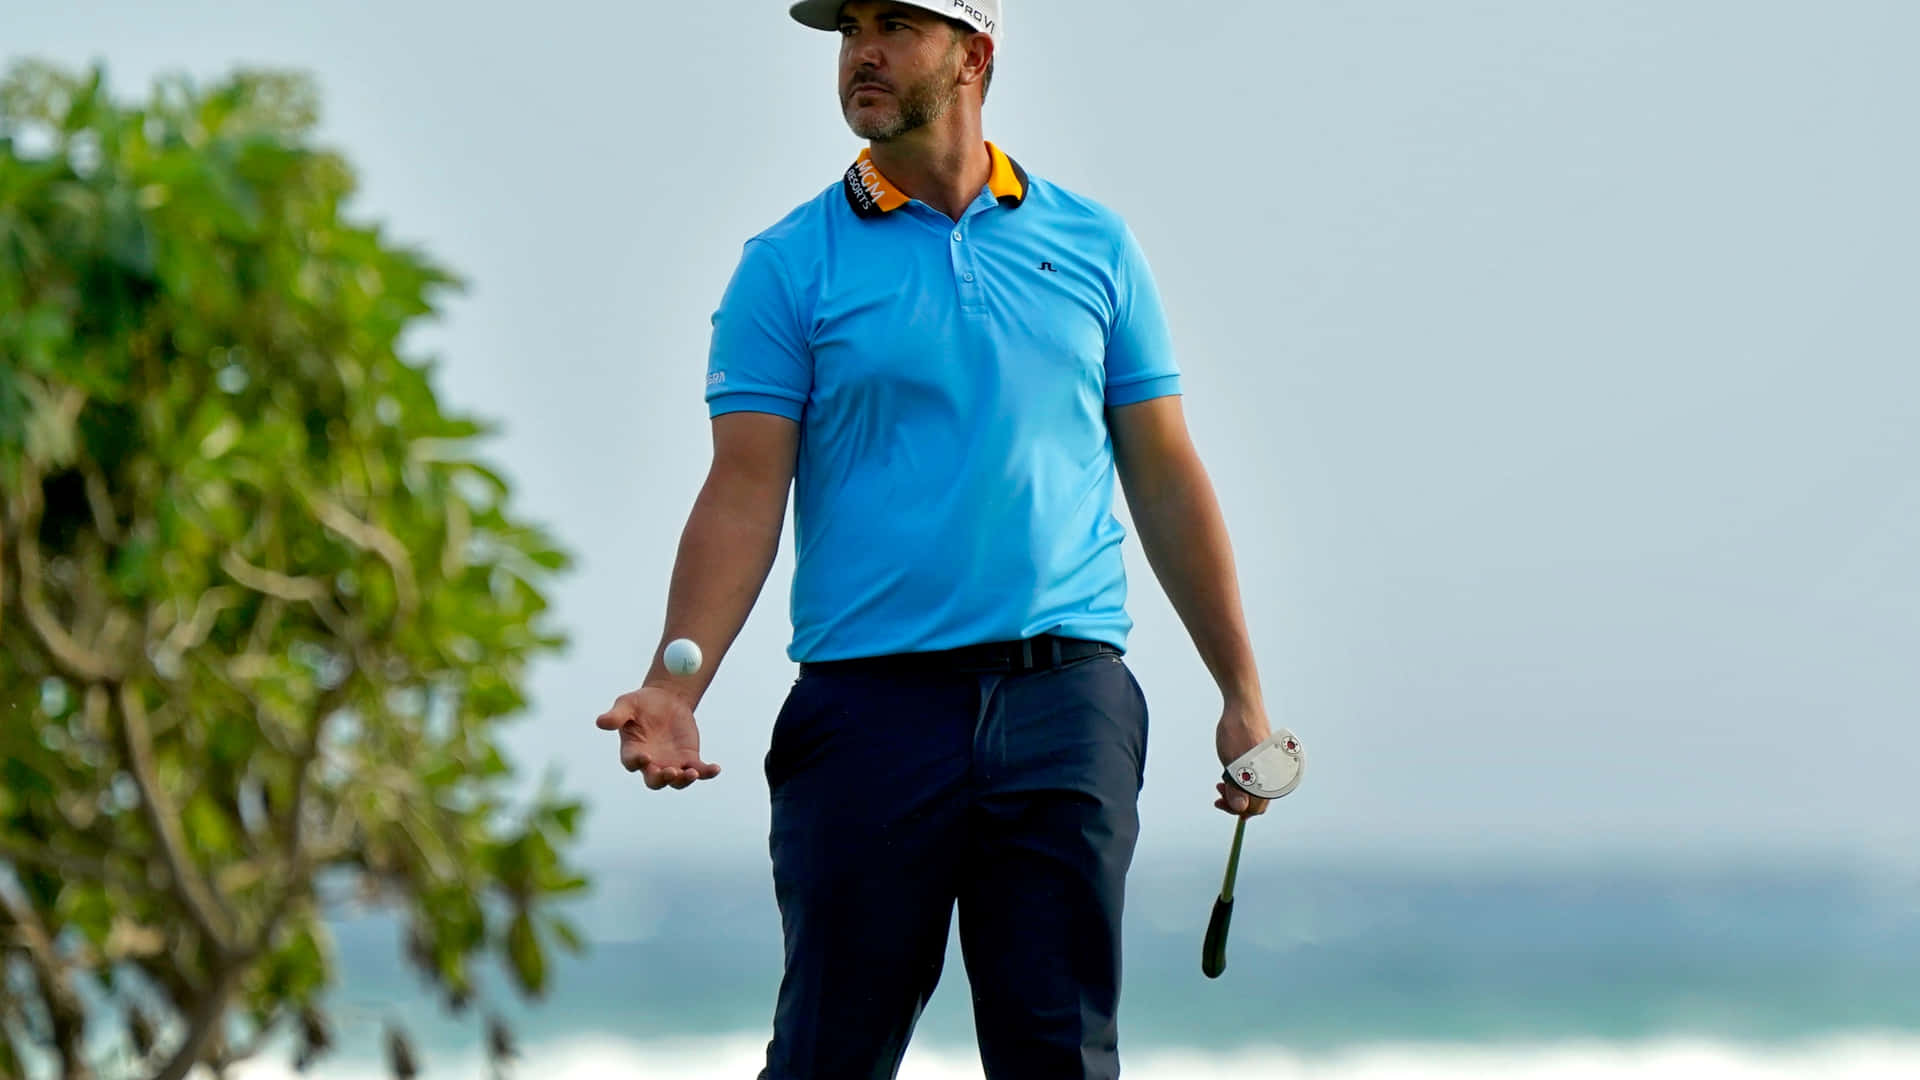 Professional Golfer Scott Piercy in Action Wallpaper